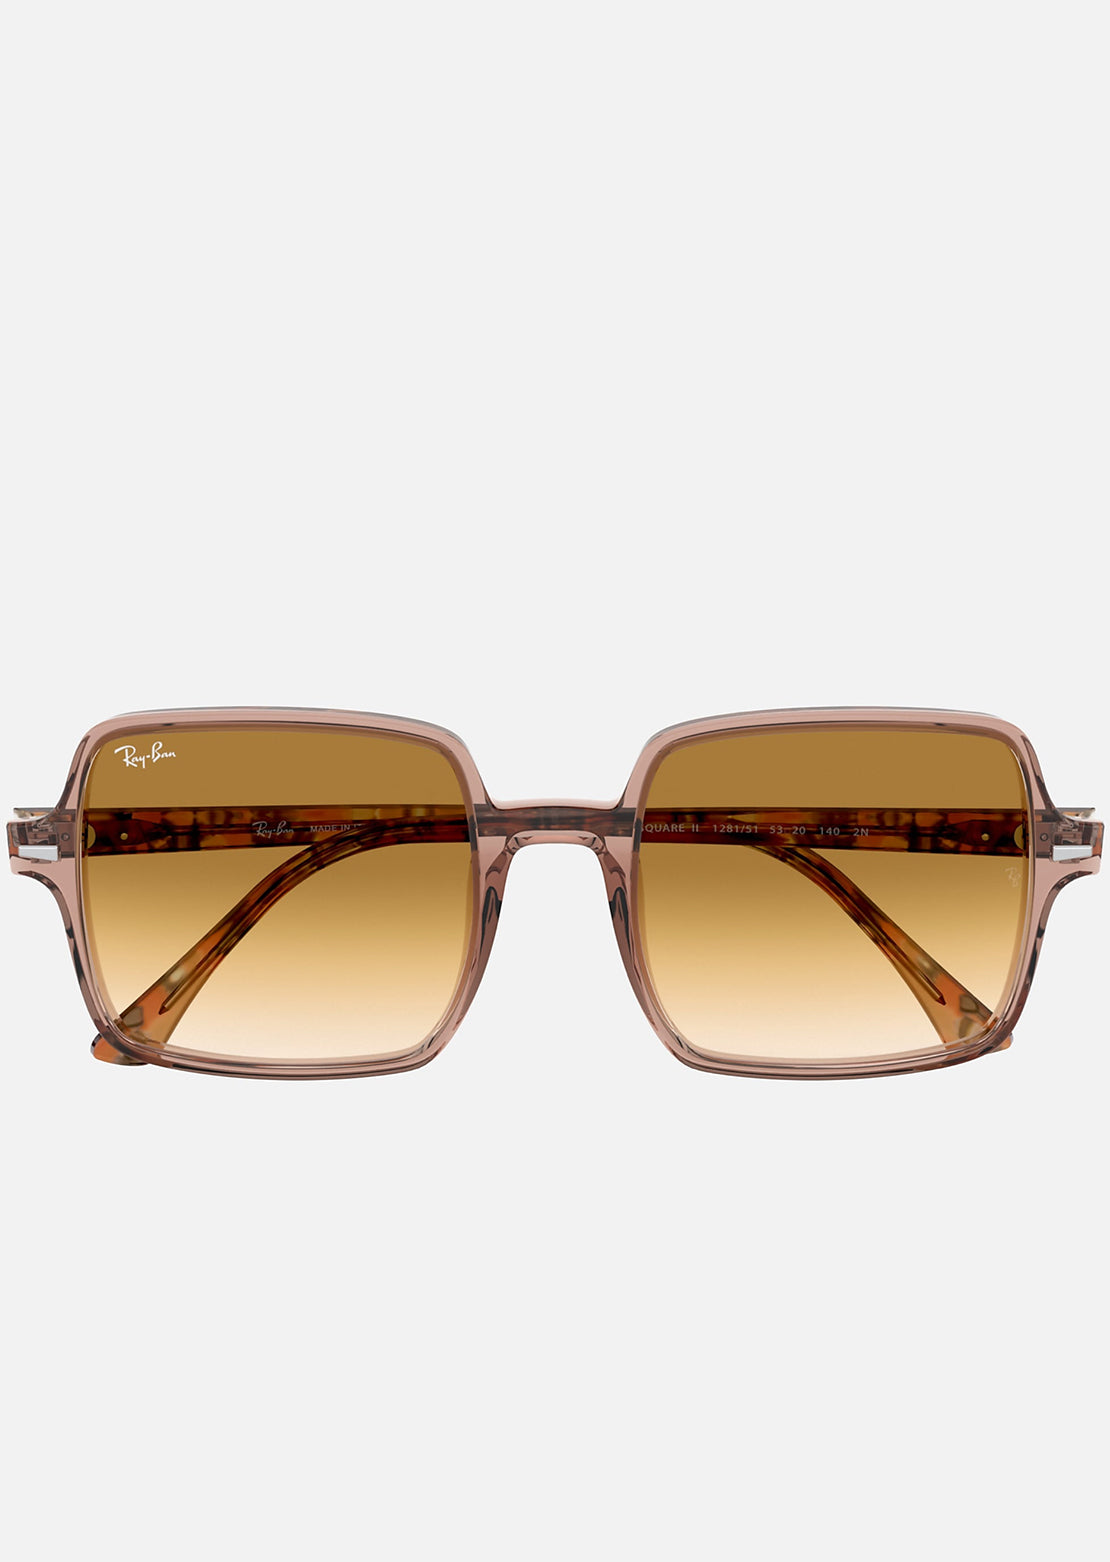 Ray-Ban Square II RB1973 Sunglasses Acetate Transparent Brown/Brown Havana/Light Brown Gradient